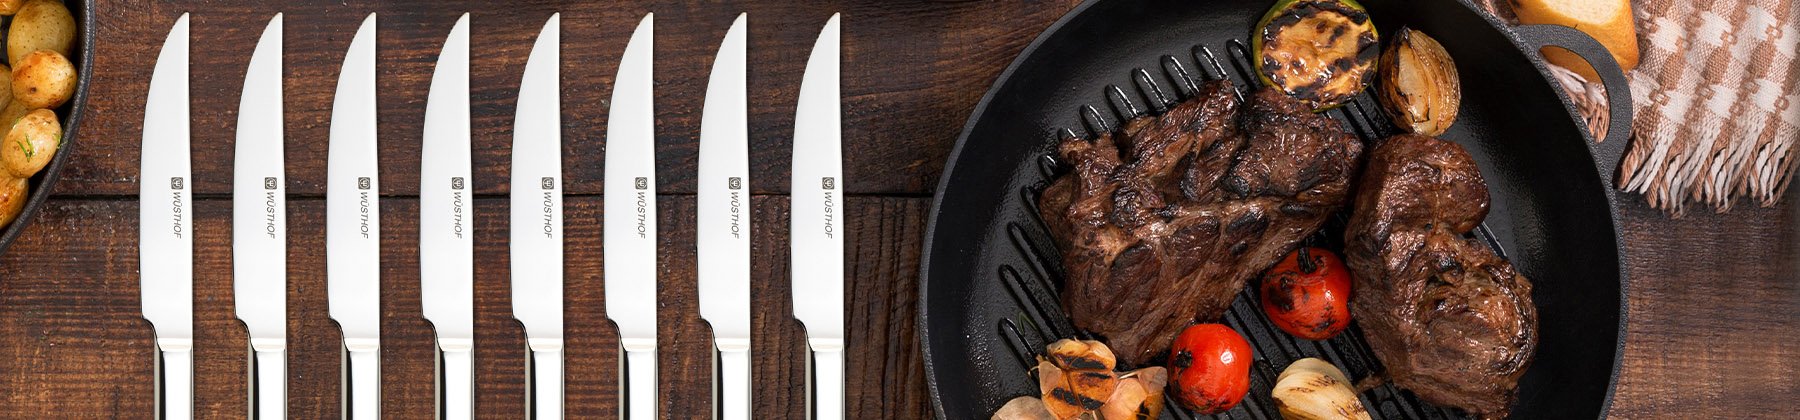 Photo of steak knives.